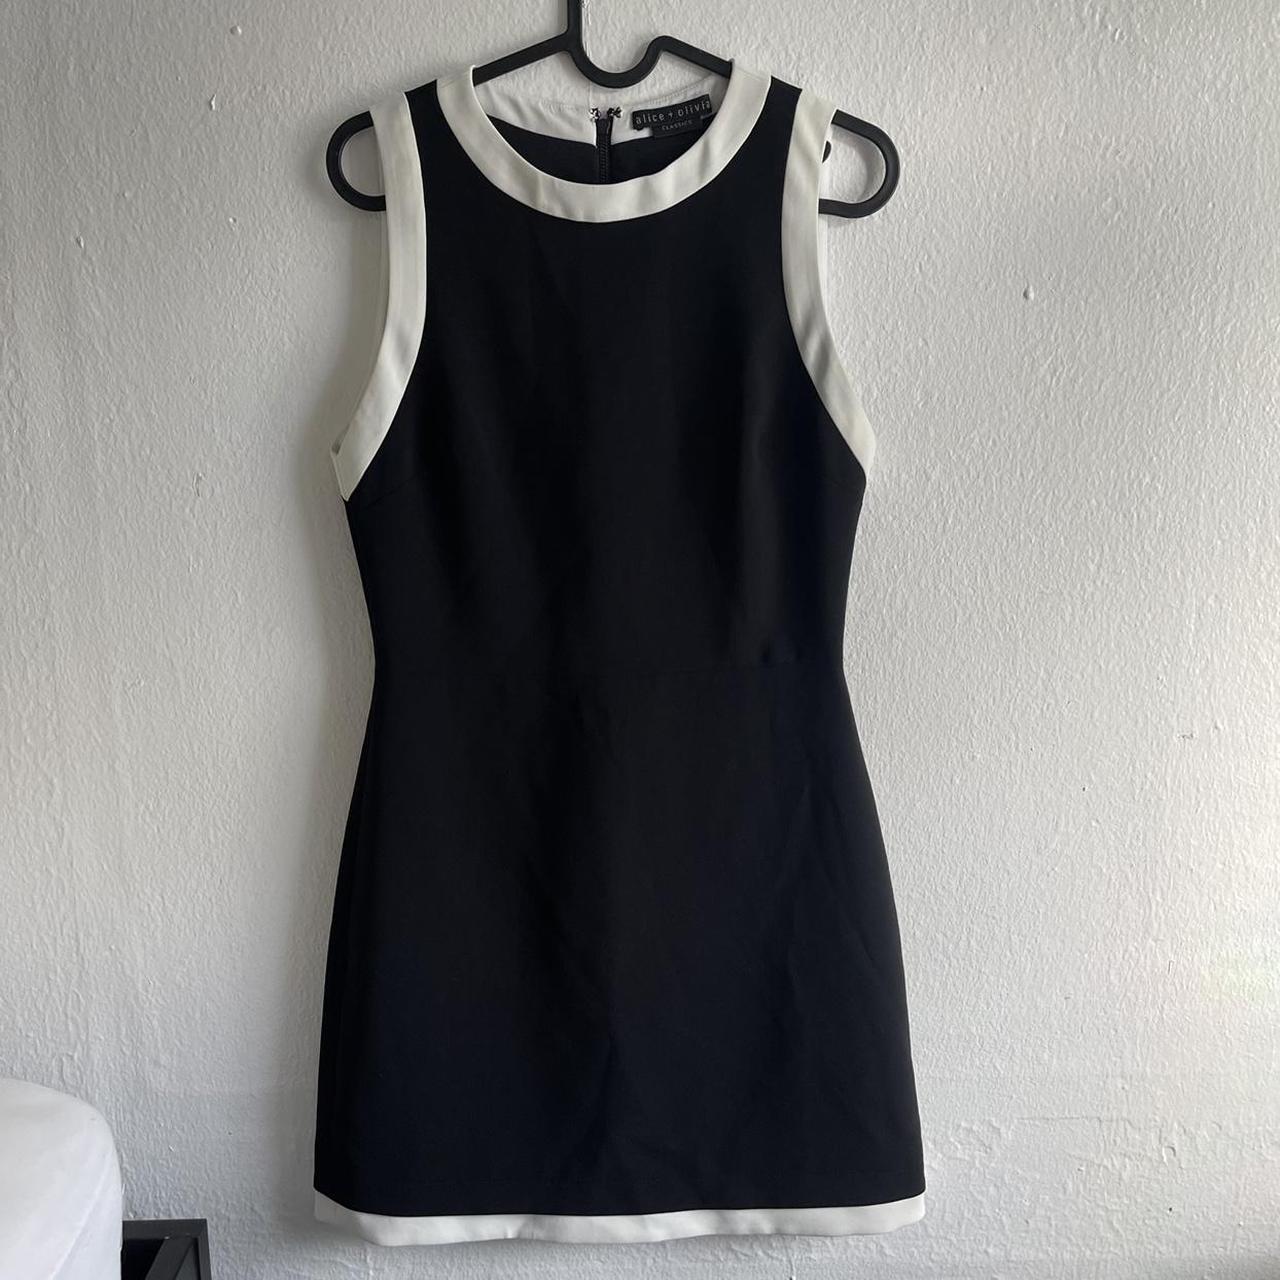 alice + olivia Women's Black and White Dress